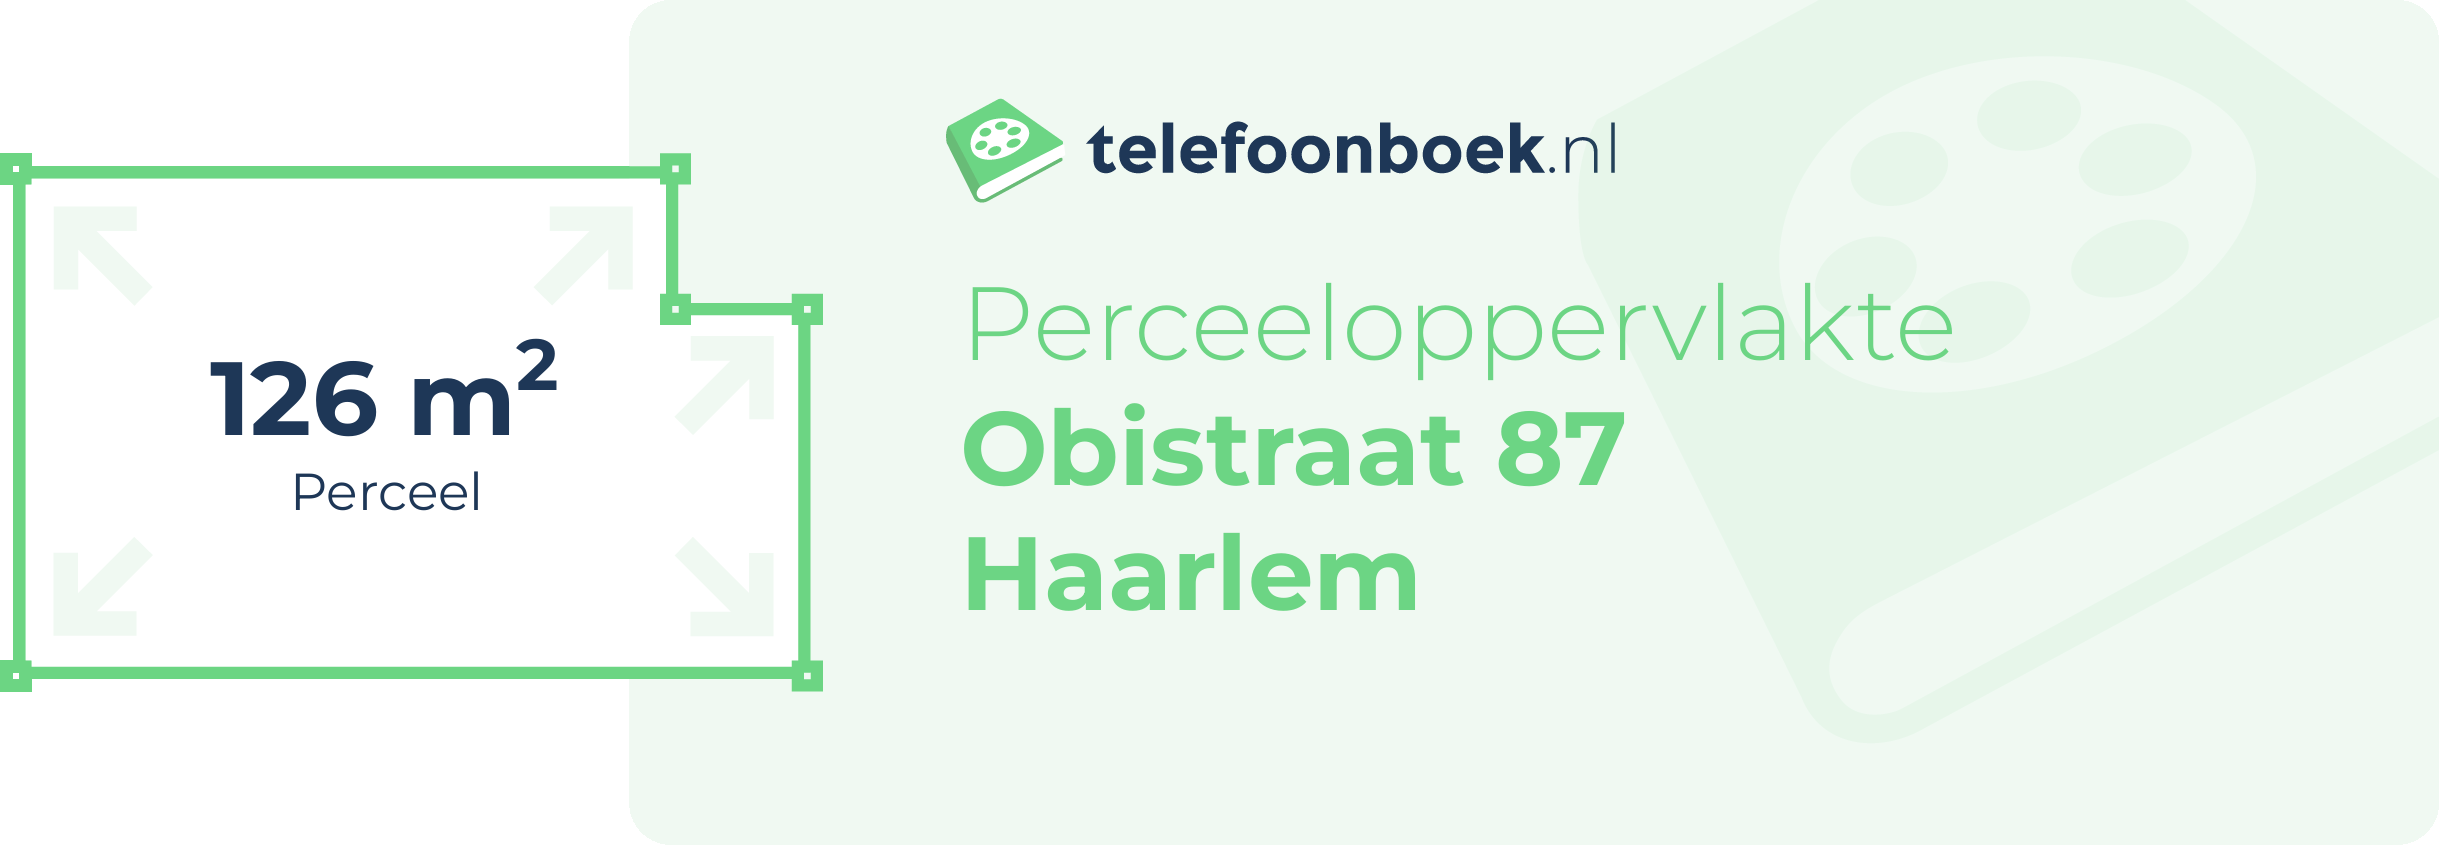 Perceeloppervlakte Obistraat 87 Haarlem